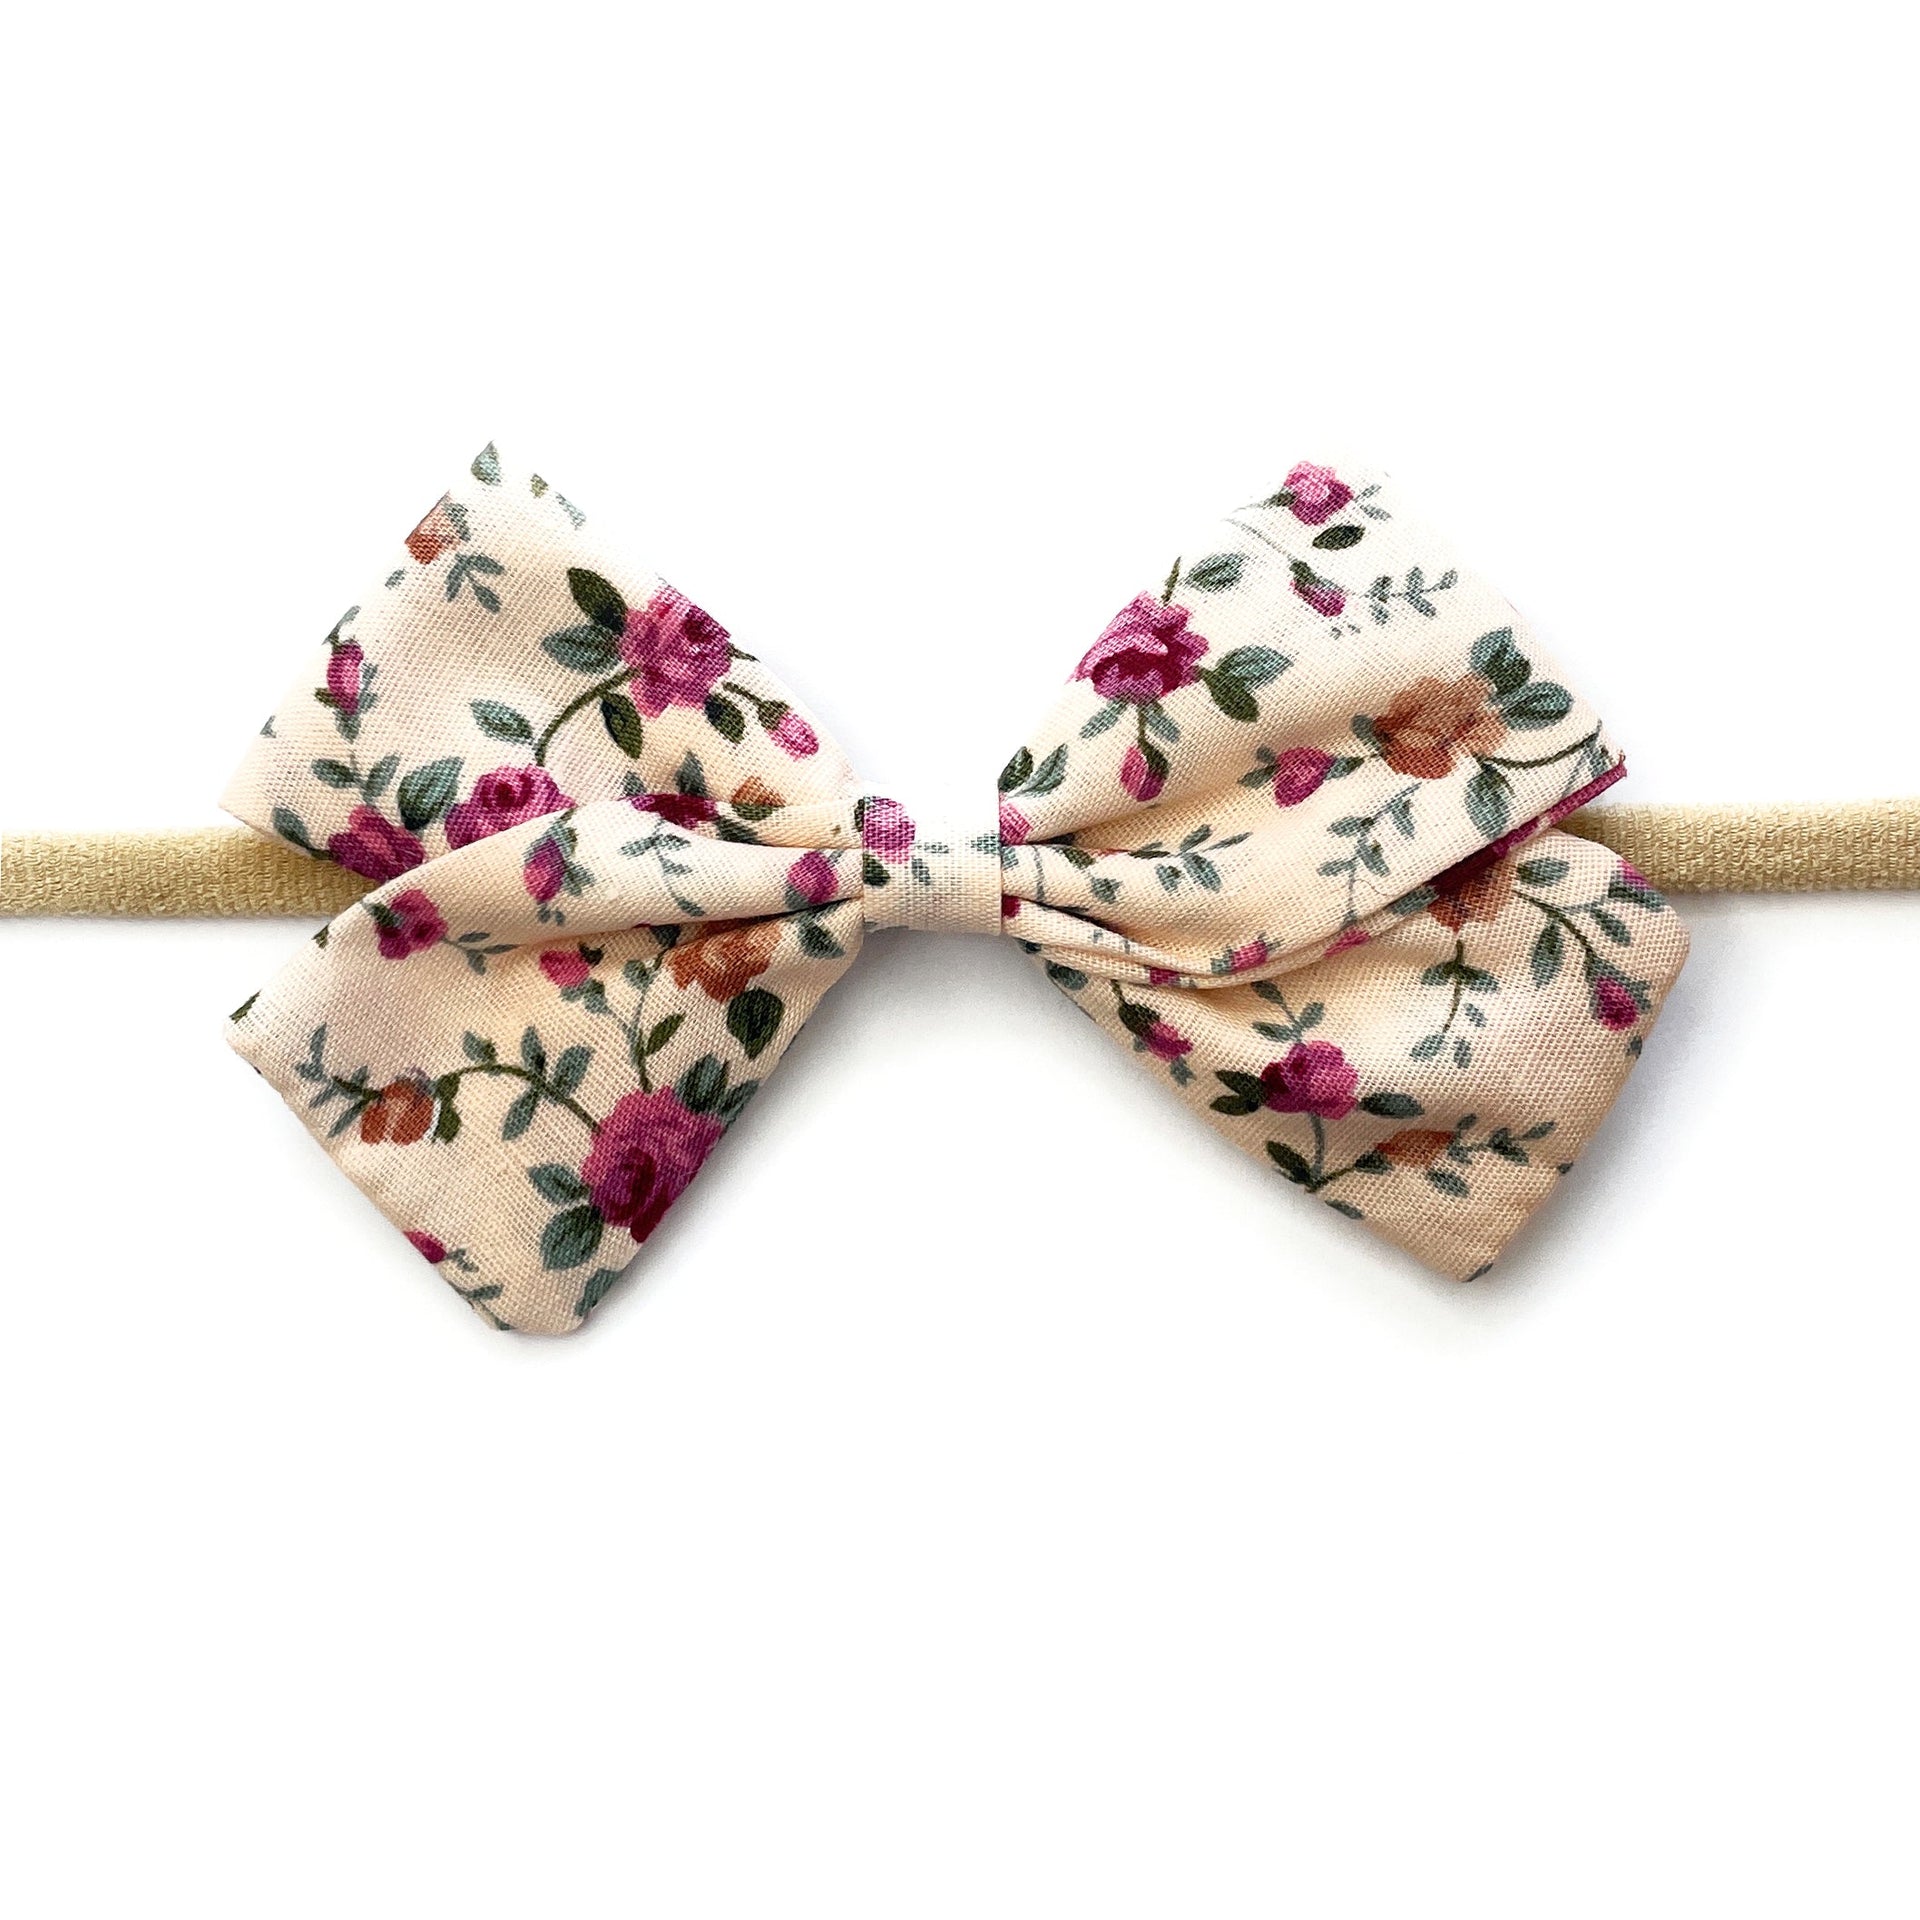 Floral Print Bow Headband - Emma Style Fabric Bow Baby Wisp